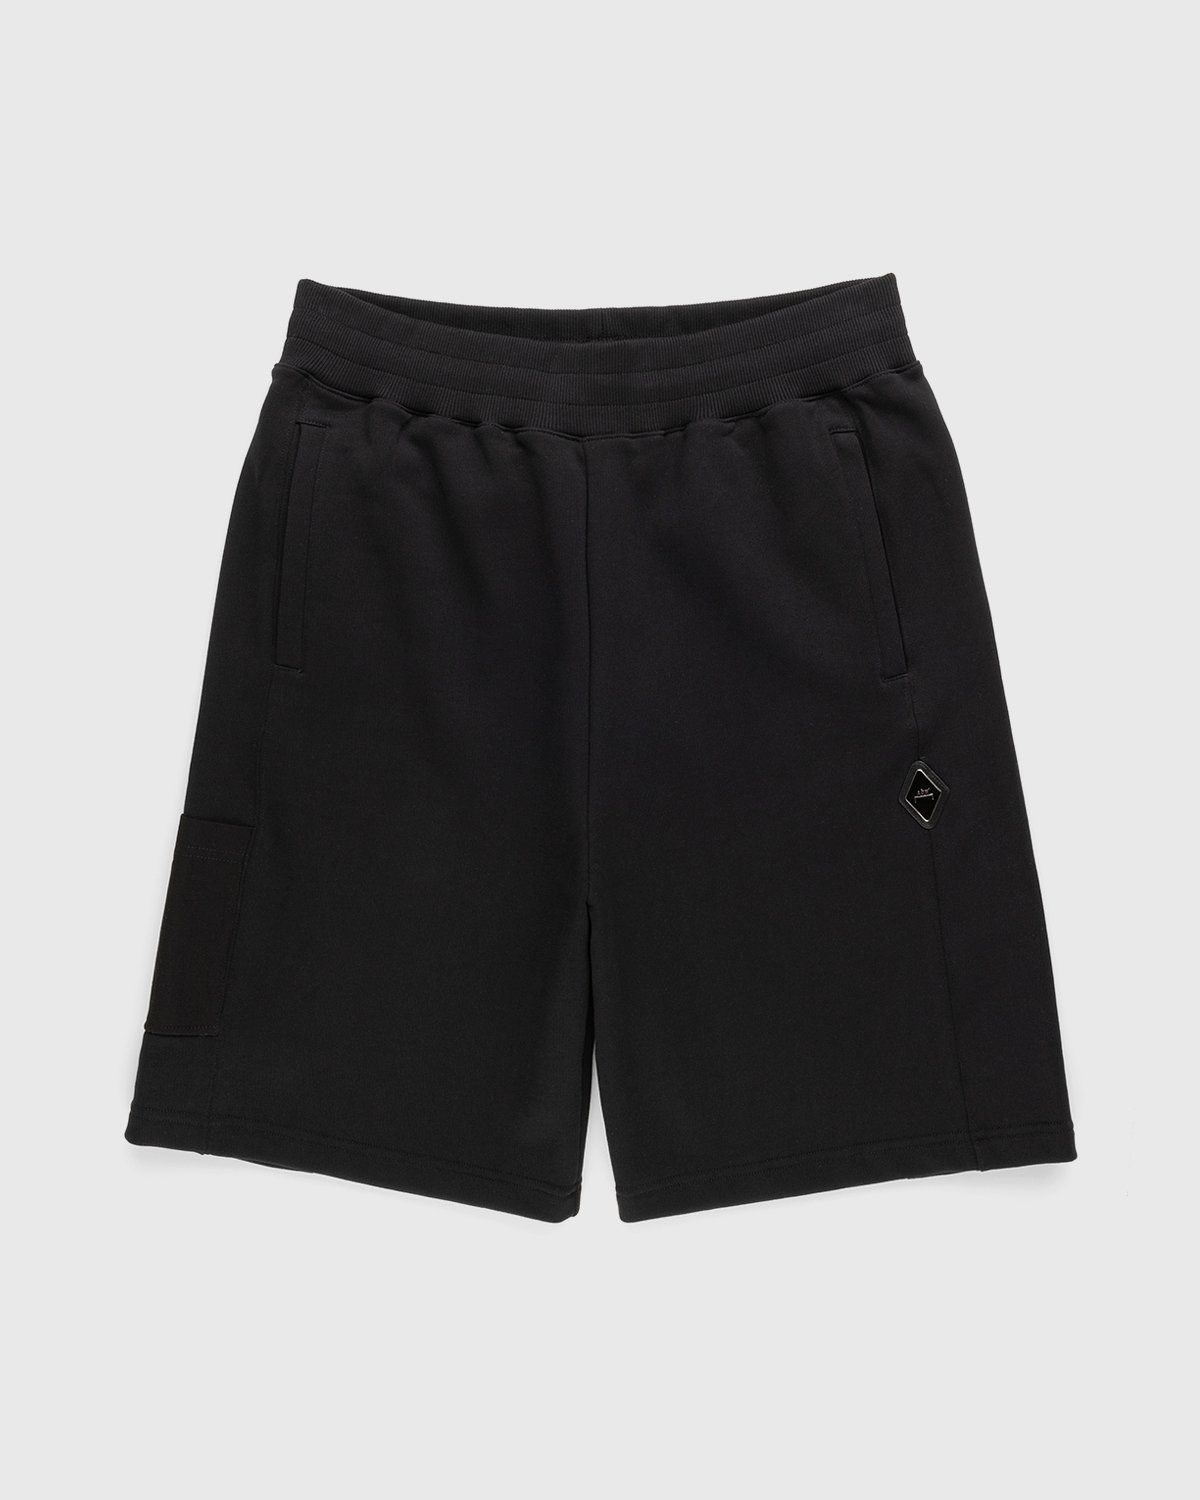 A-Cold-Wall* - Vault Shorts Black - Clothing - Black - Image 1